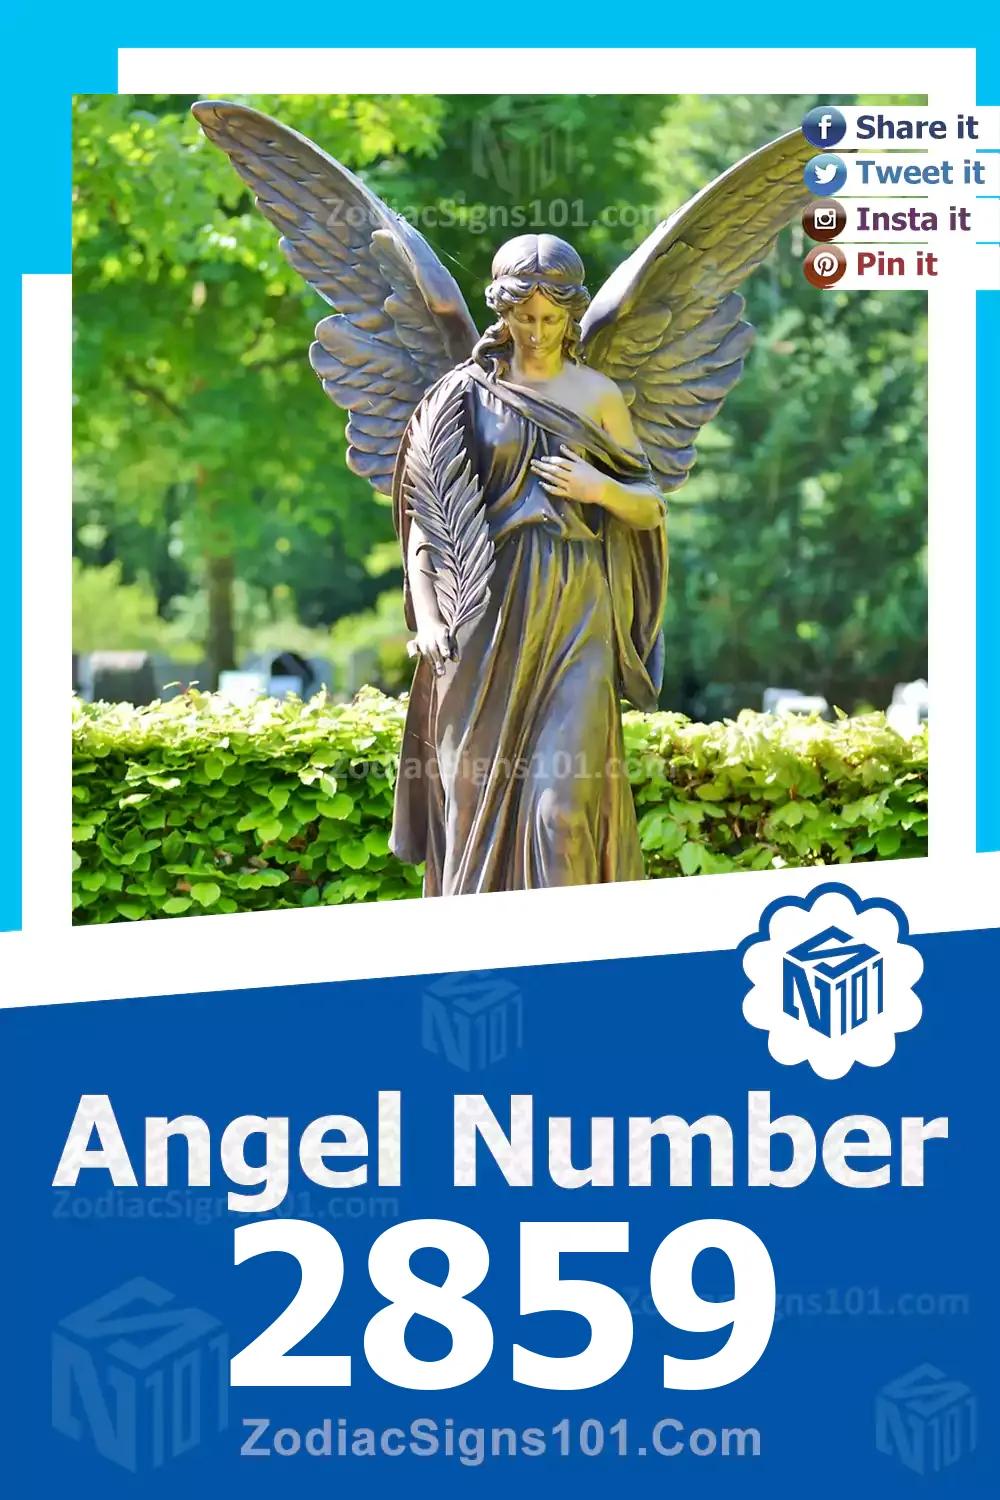 2859-Angel-Number-Meaning.jpg